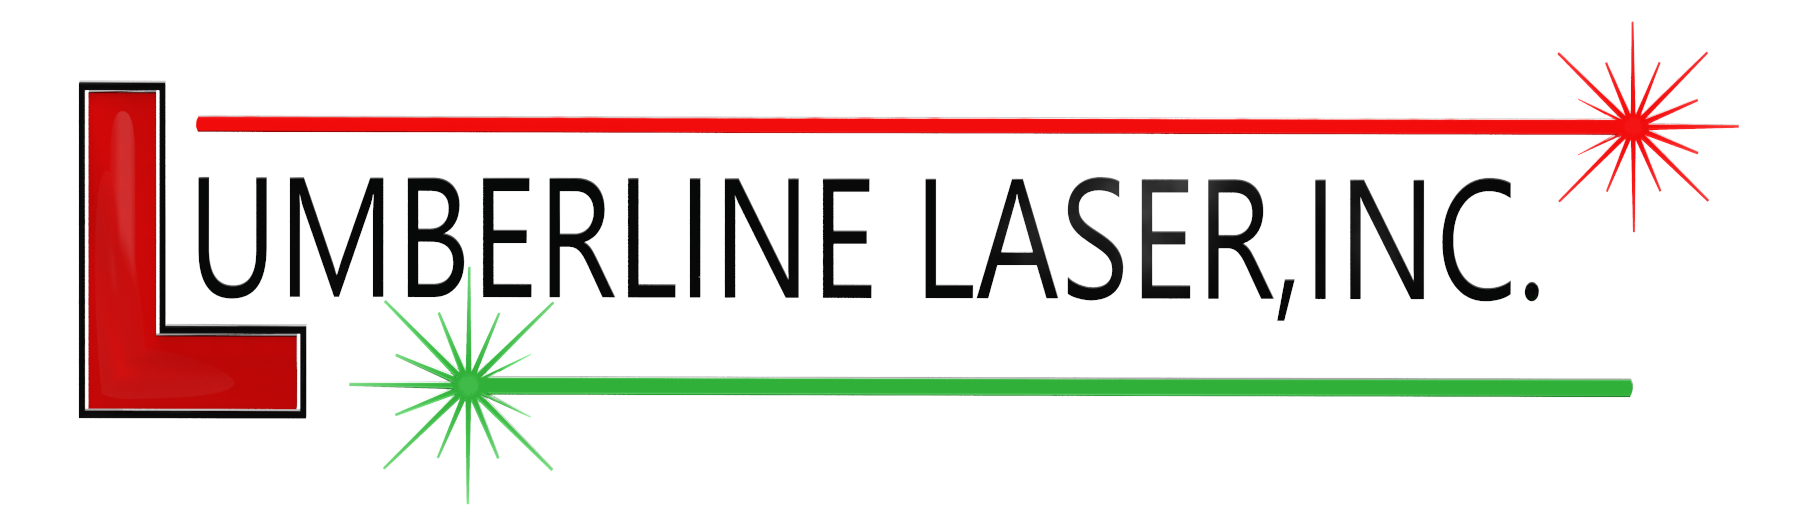 Lumberline Laser